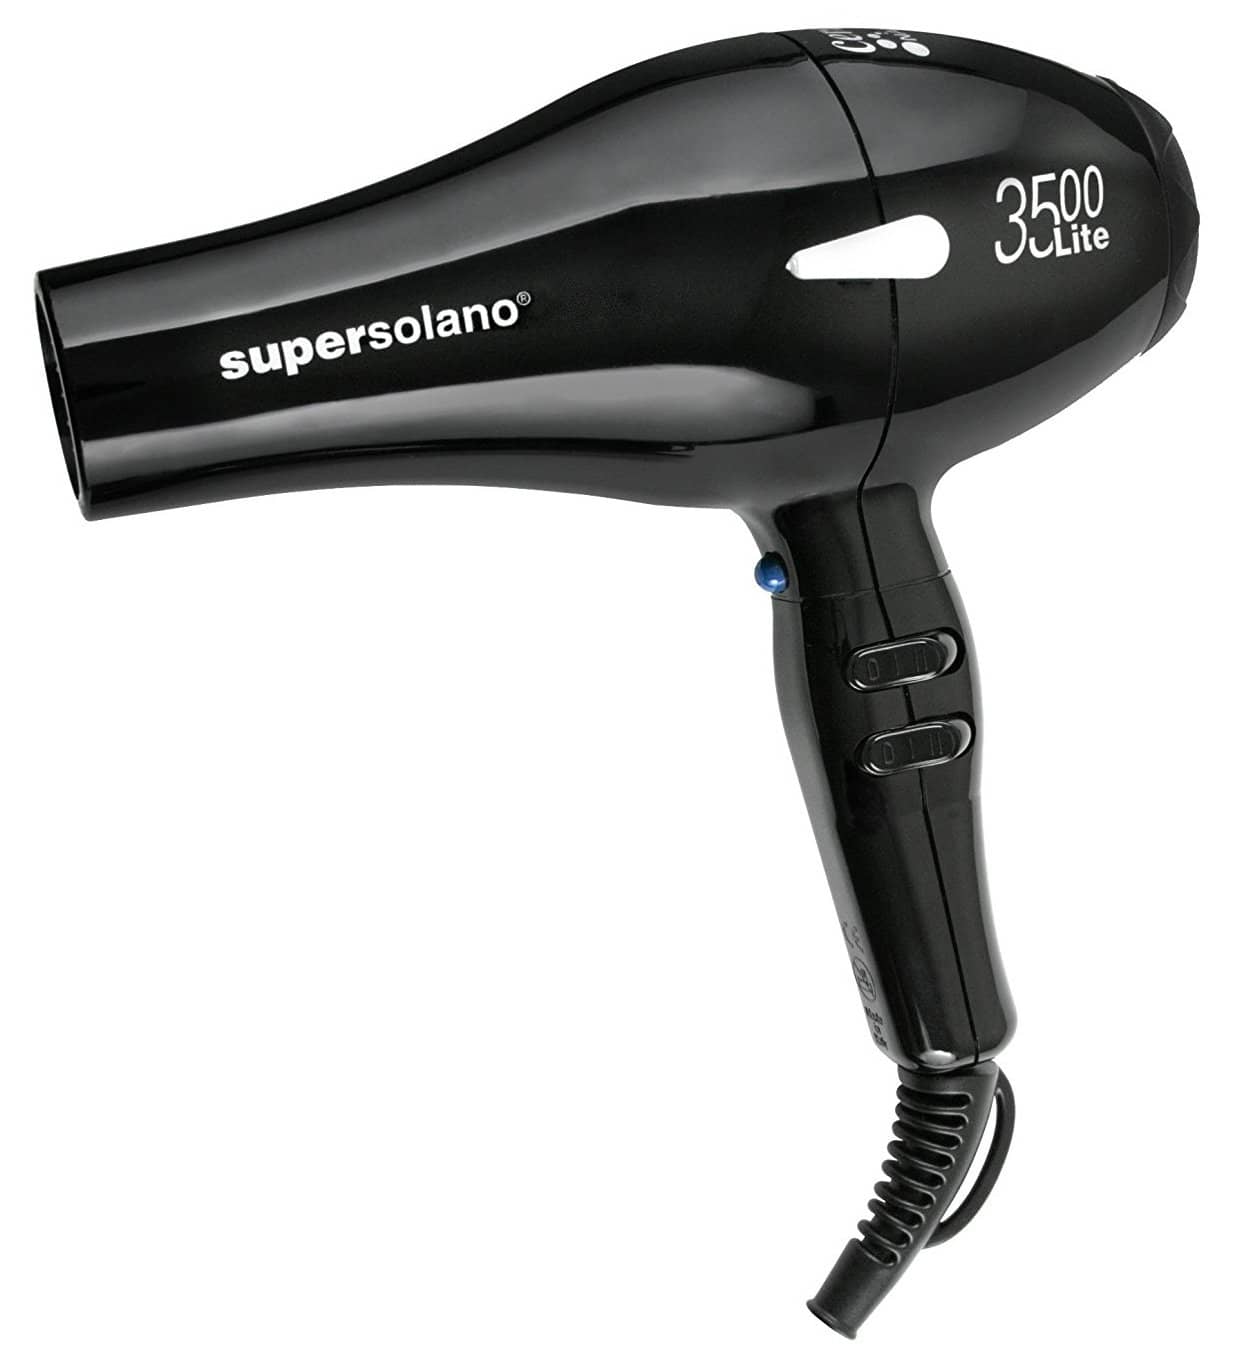 Super Solano 3500 Lite Hair Dryer